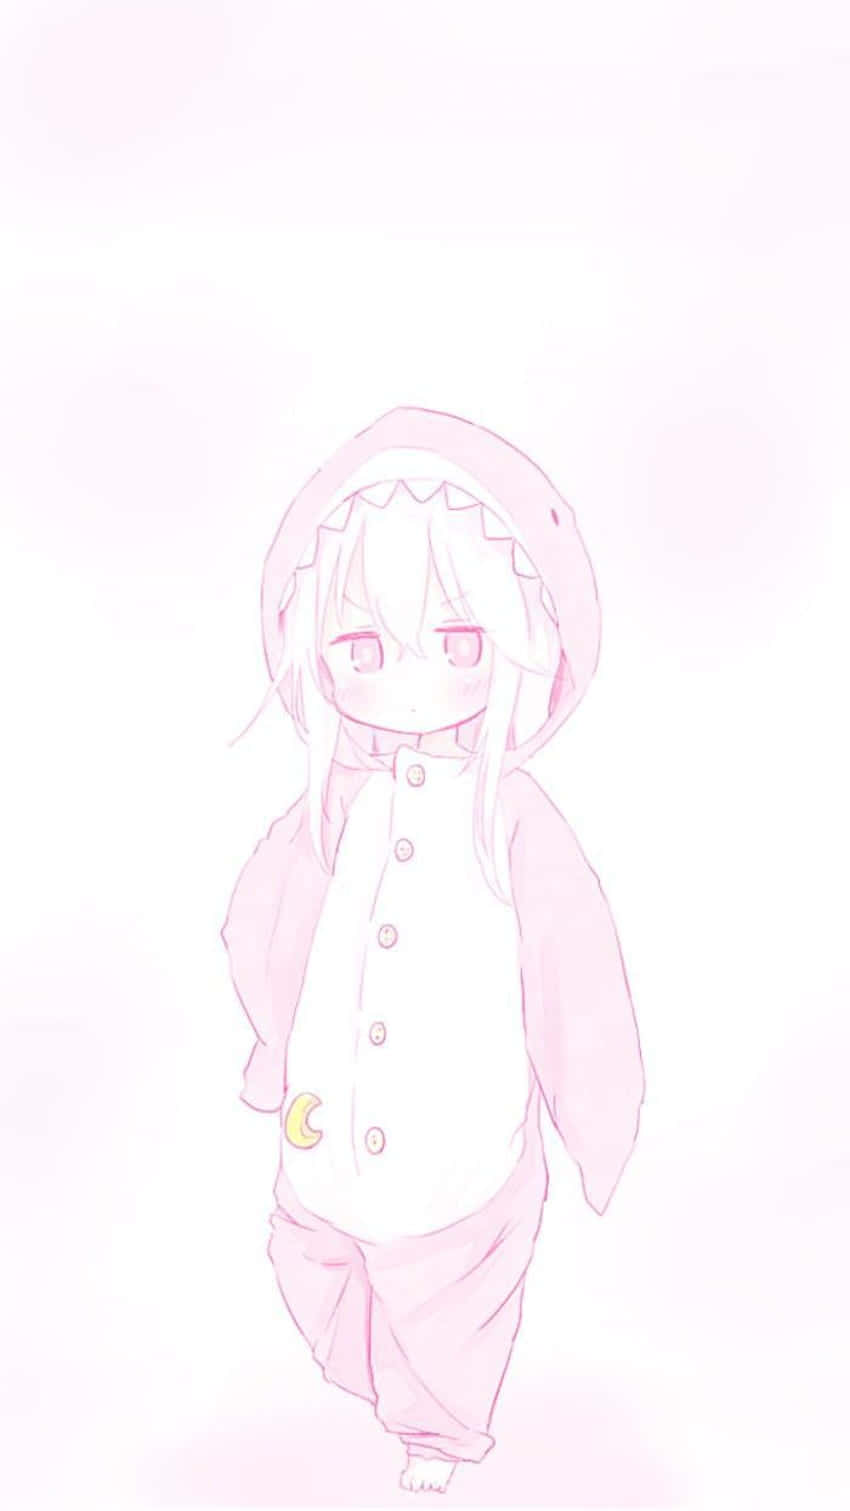 Black or pink? | Cute anime/kawaii style girl with a bunny | by IG  @yukomeow_ : r/SoftAesthetic